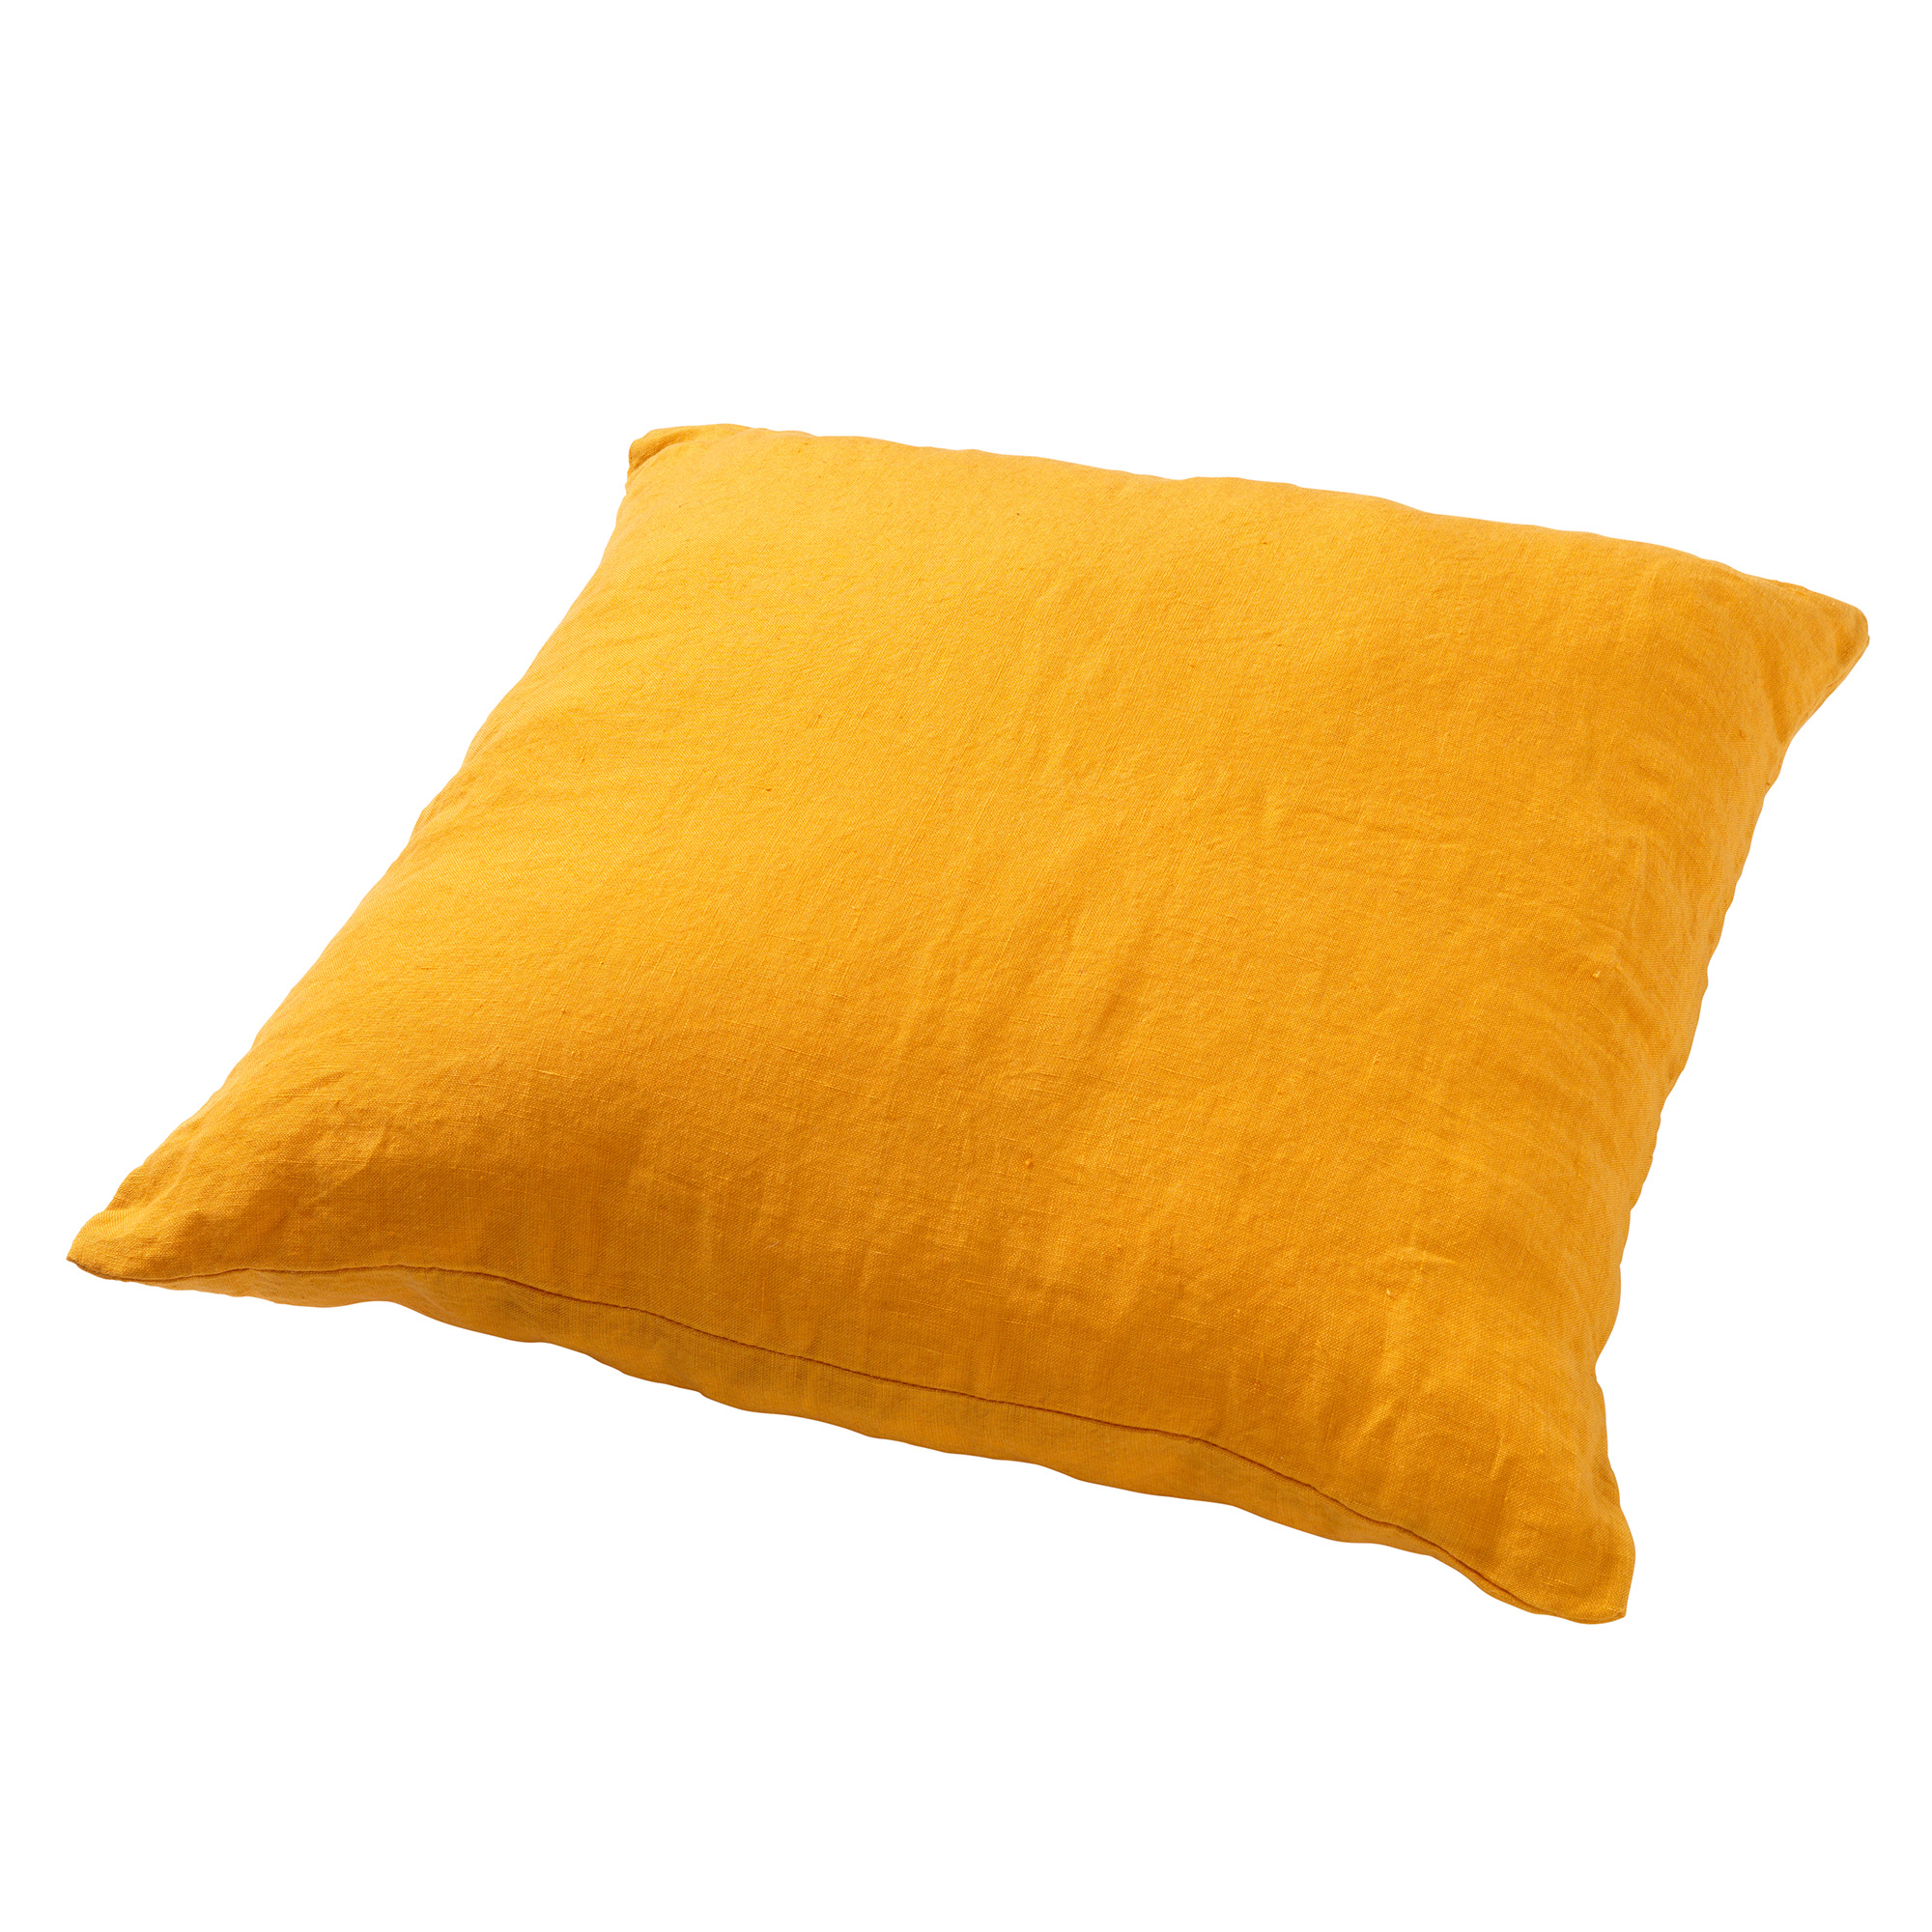 LINN - Kussenhoes 45x45 cm - 100% linnen - effen kleur - Golden Glow - geel